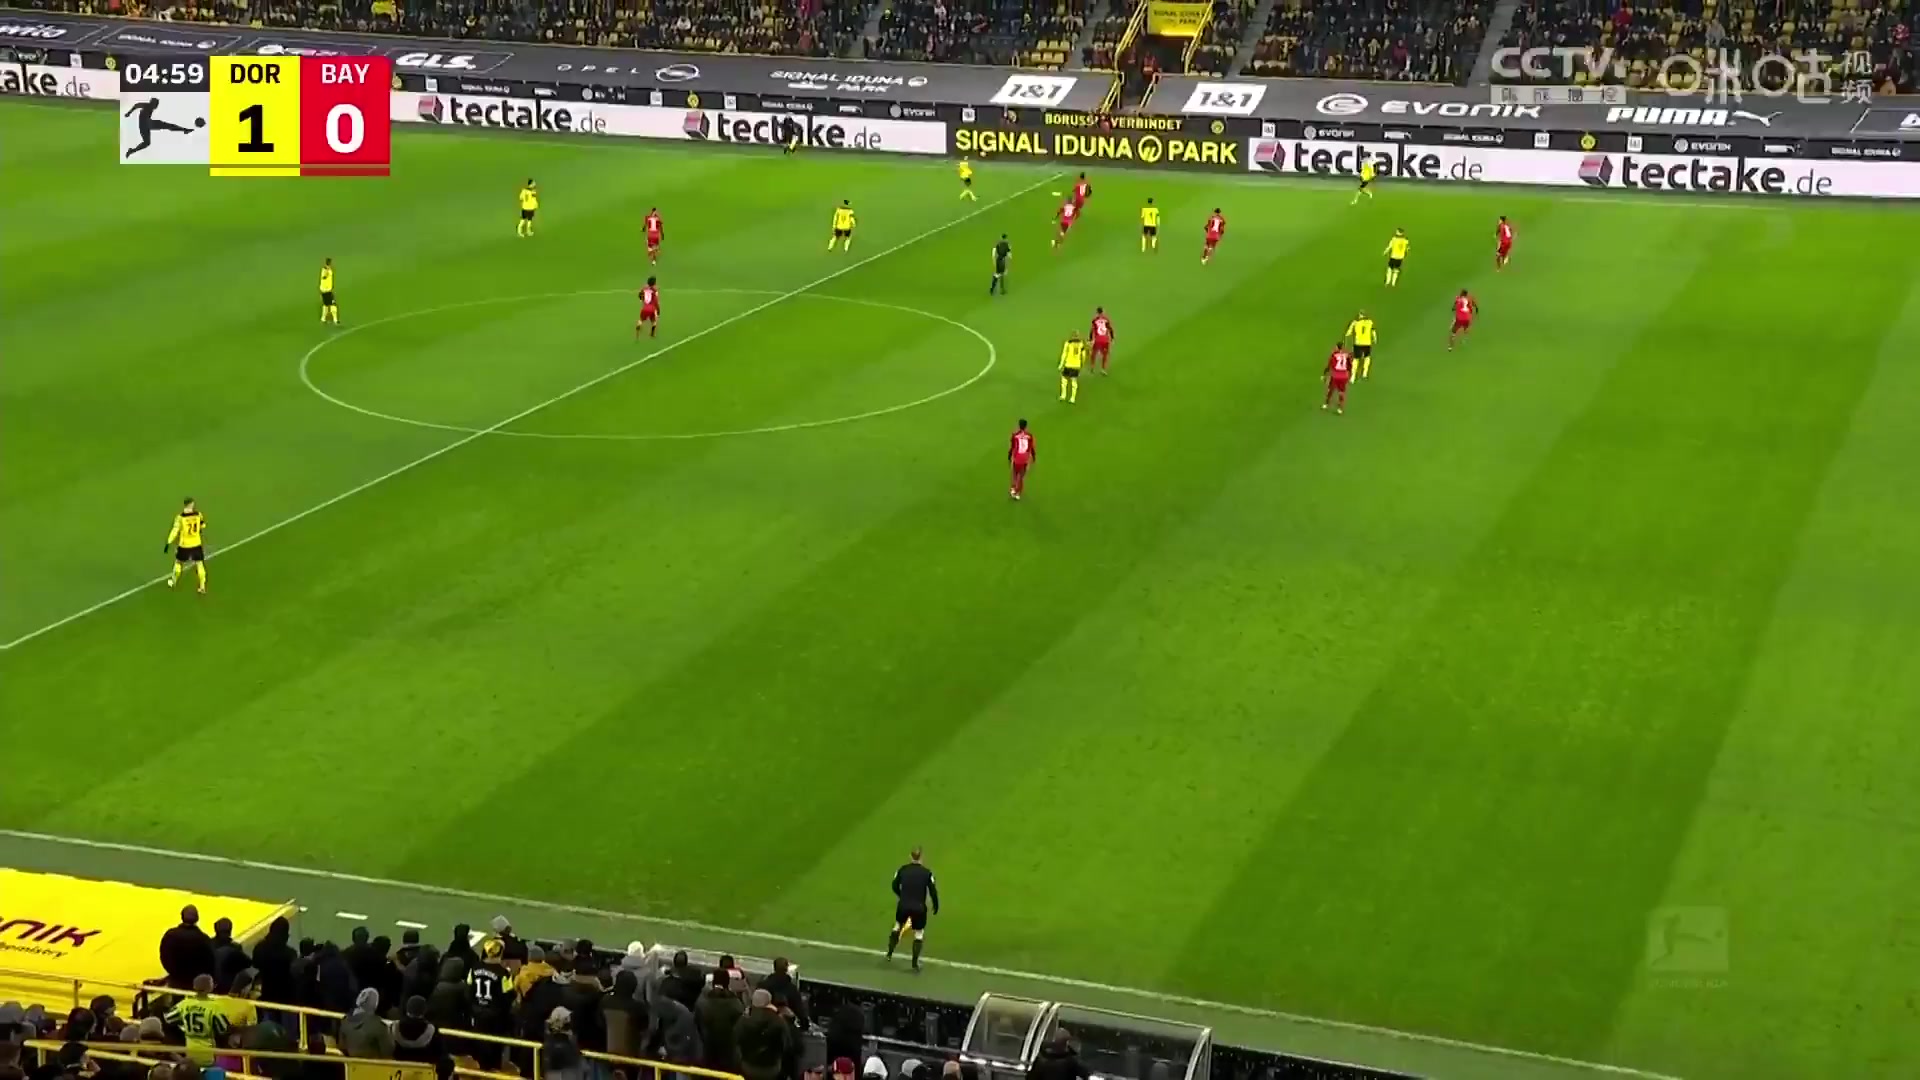 Bundesliga Borussia Dortmund Vs Bayern Munchen Robert Lewandowski Goal in 7 min, Score 1:0